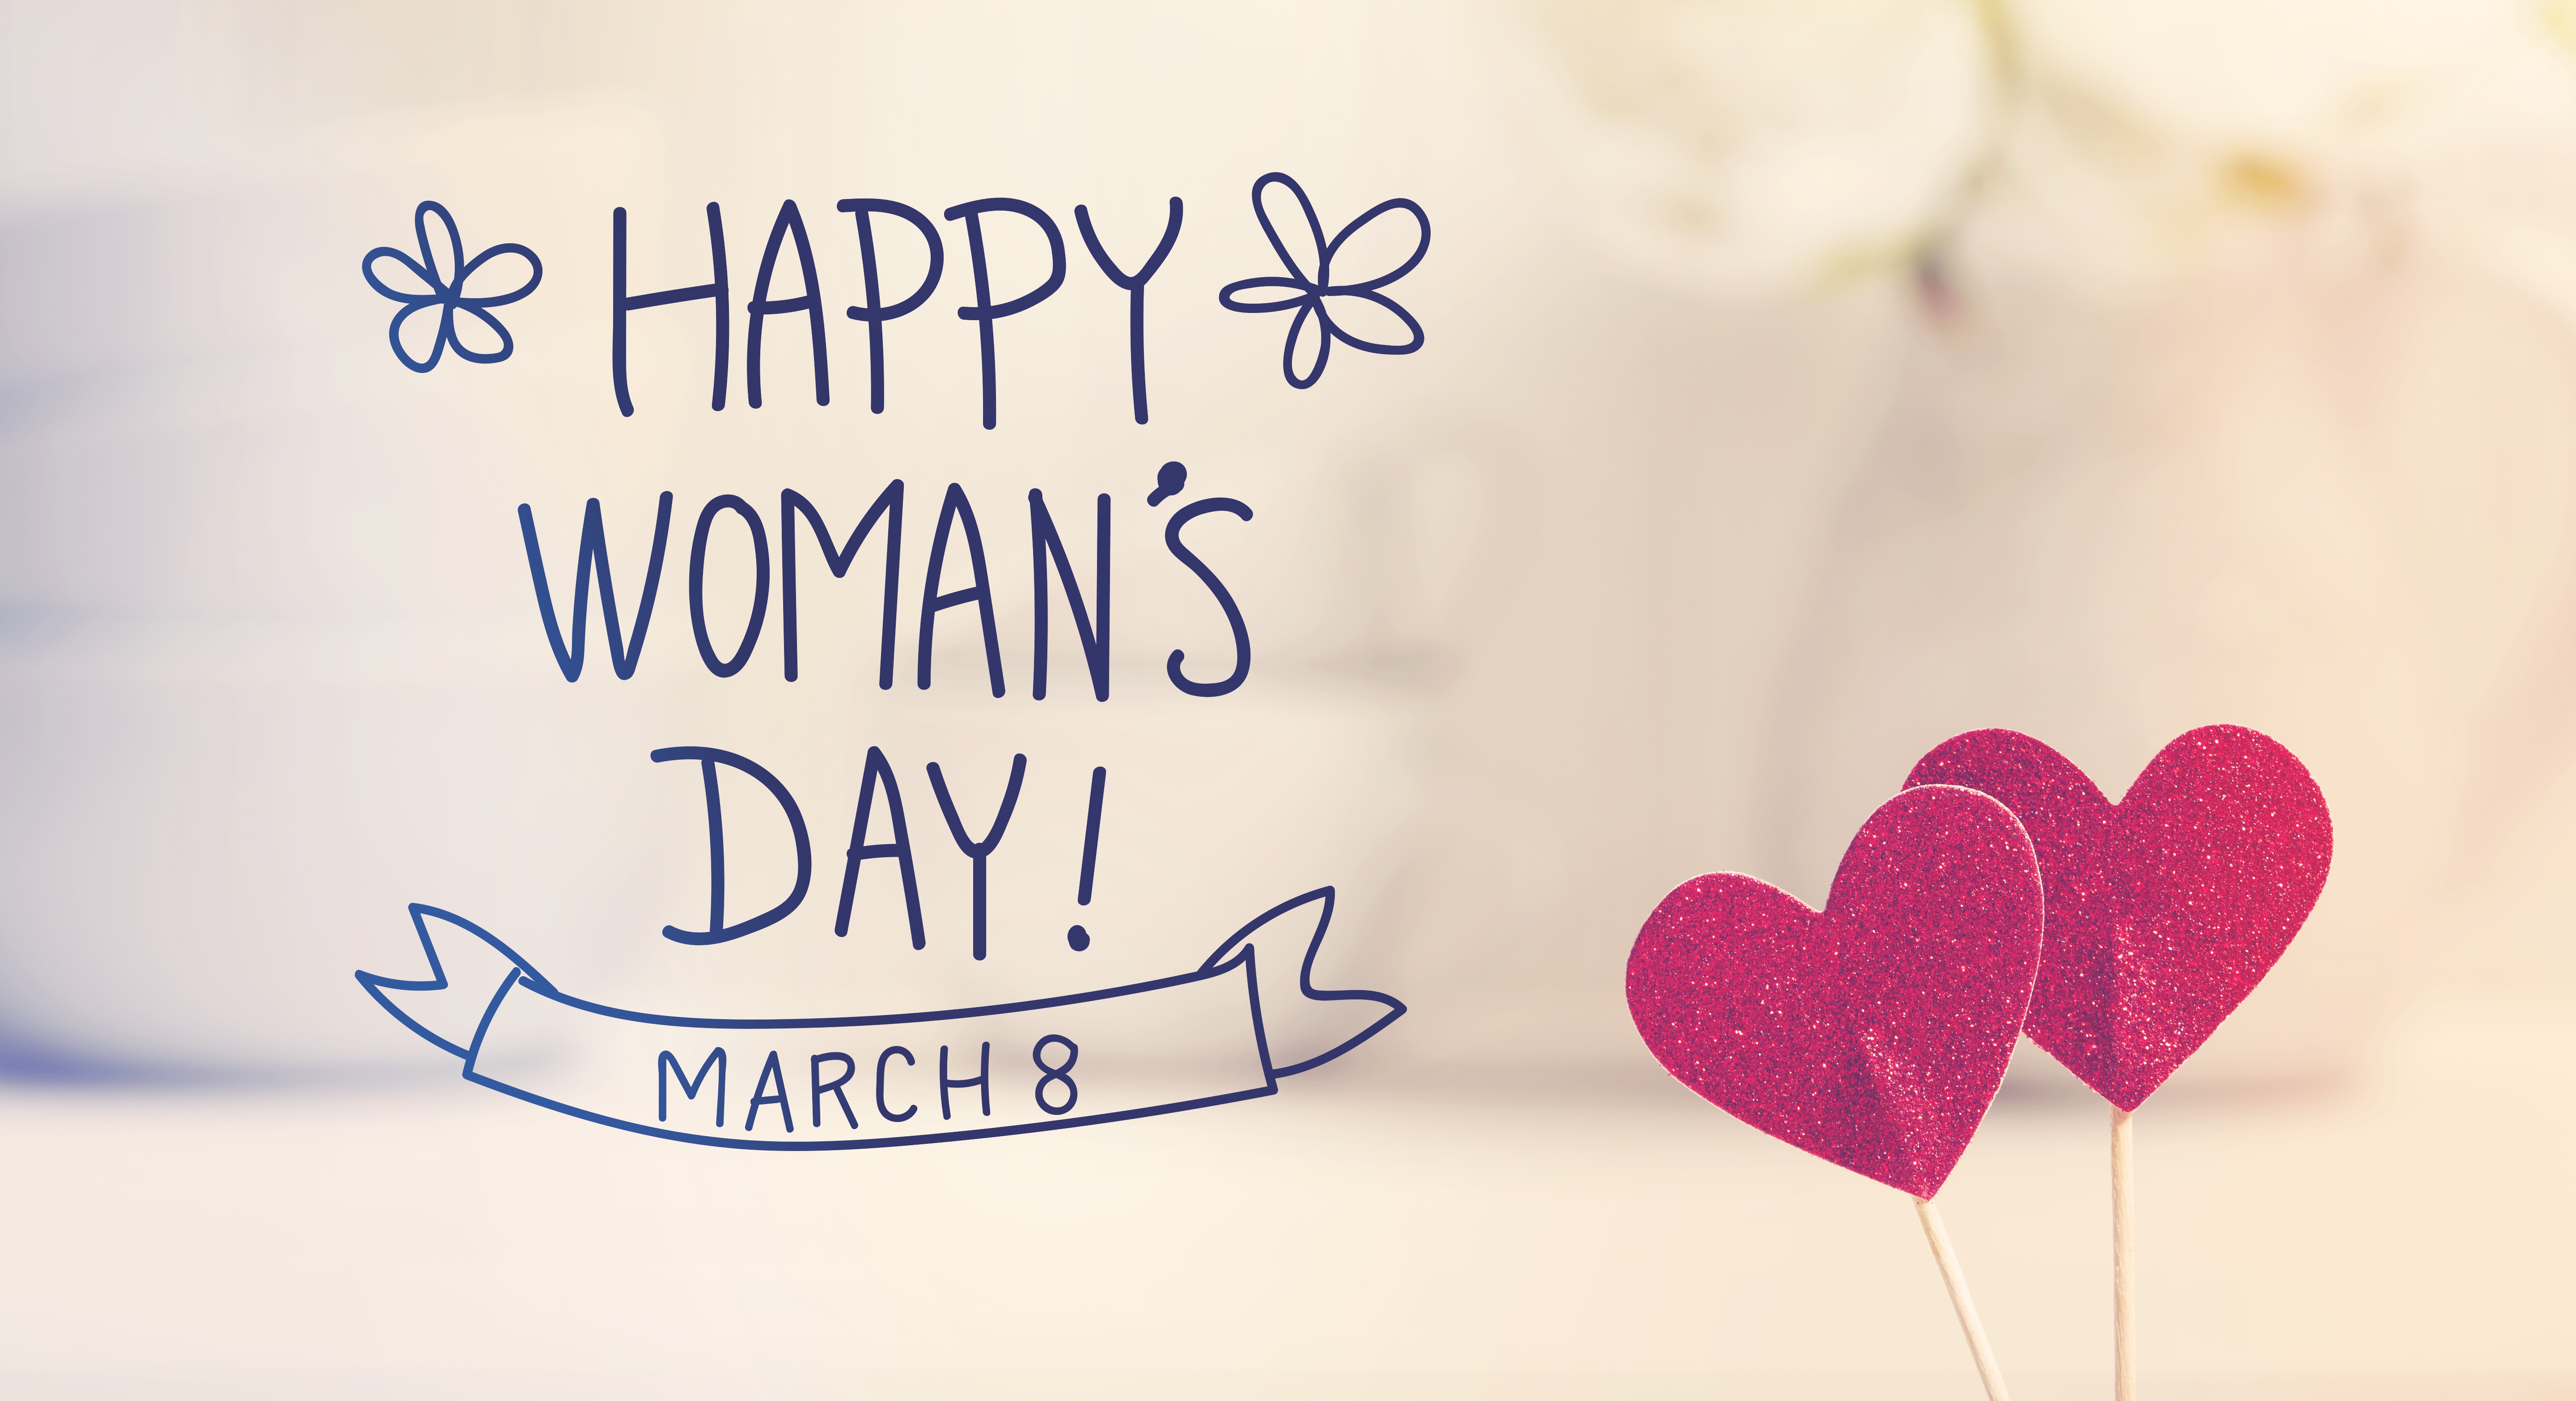 holiday, women's day, happy women's day, heart